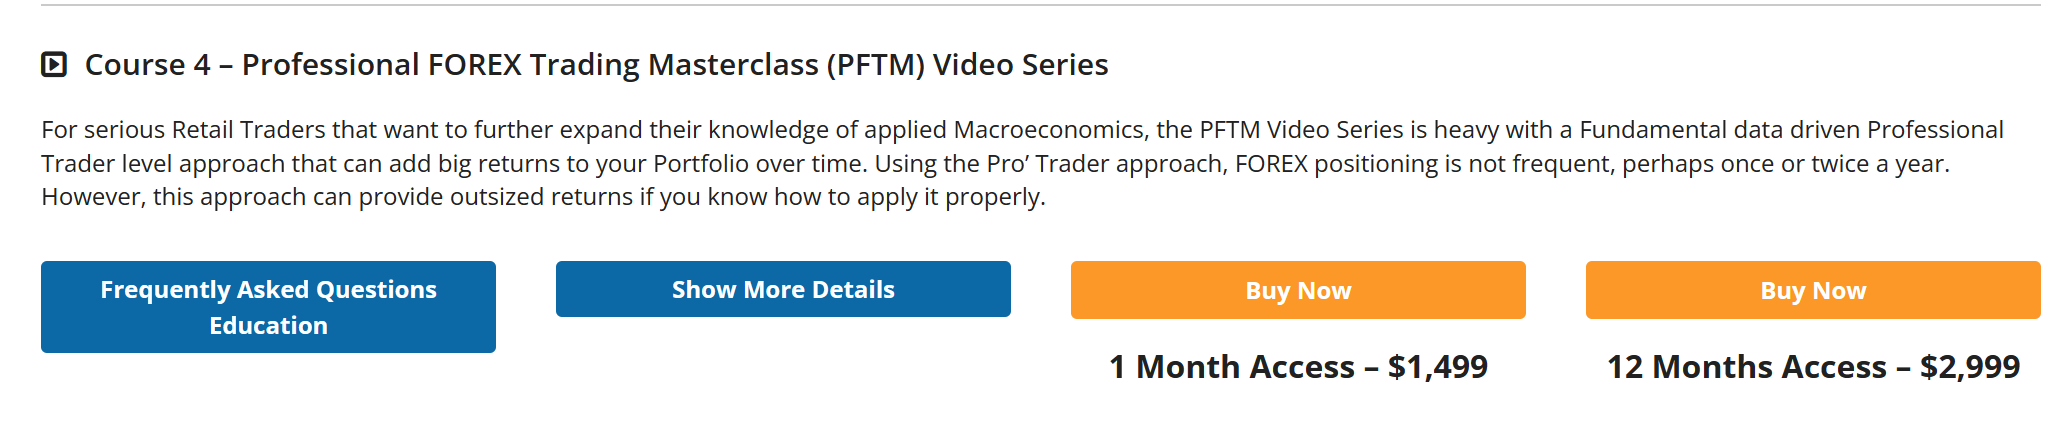 Professional FOREX Trading Masterclass (PFTM) Video Series 